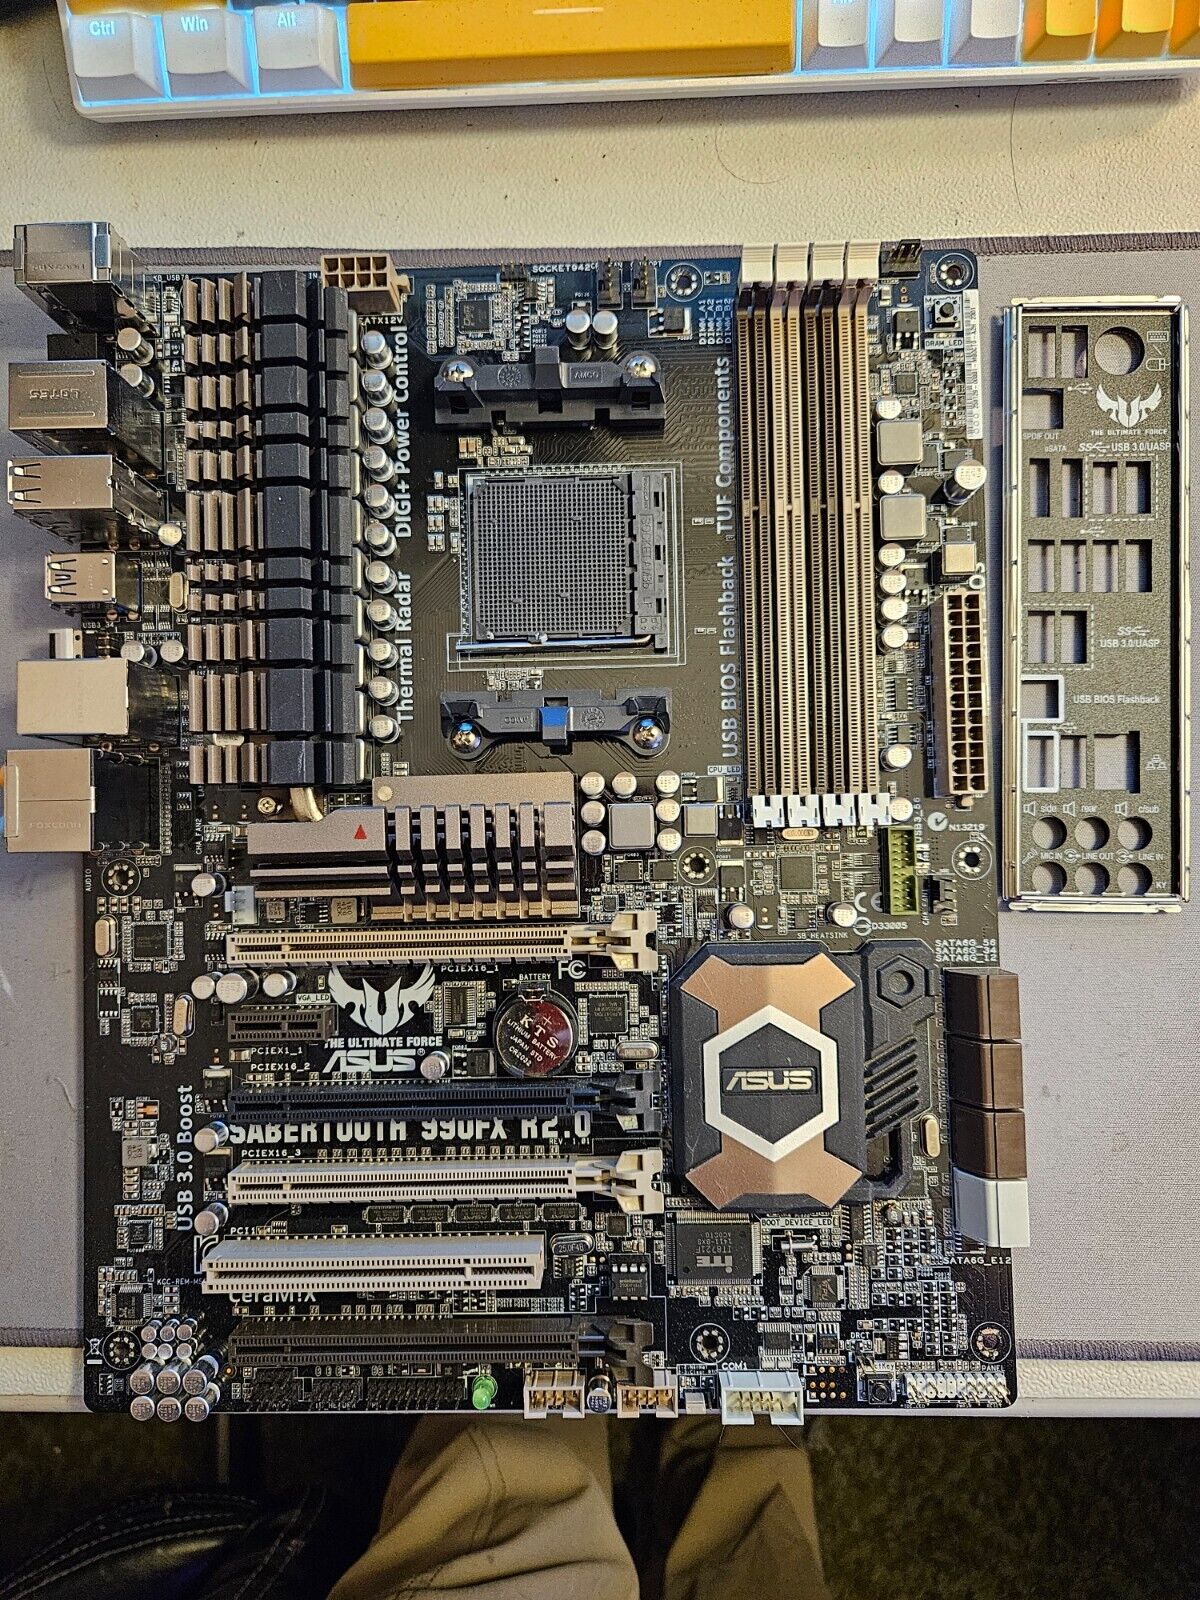 ASUS TUF SABERTOOTH 990FX R2.0 AM3+ AMD 990FX + SB950 SATA 6Gb/s USB 3.0 ATX AMD